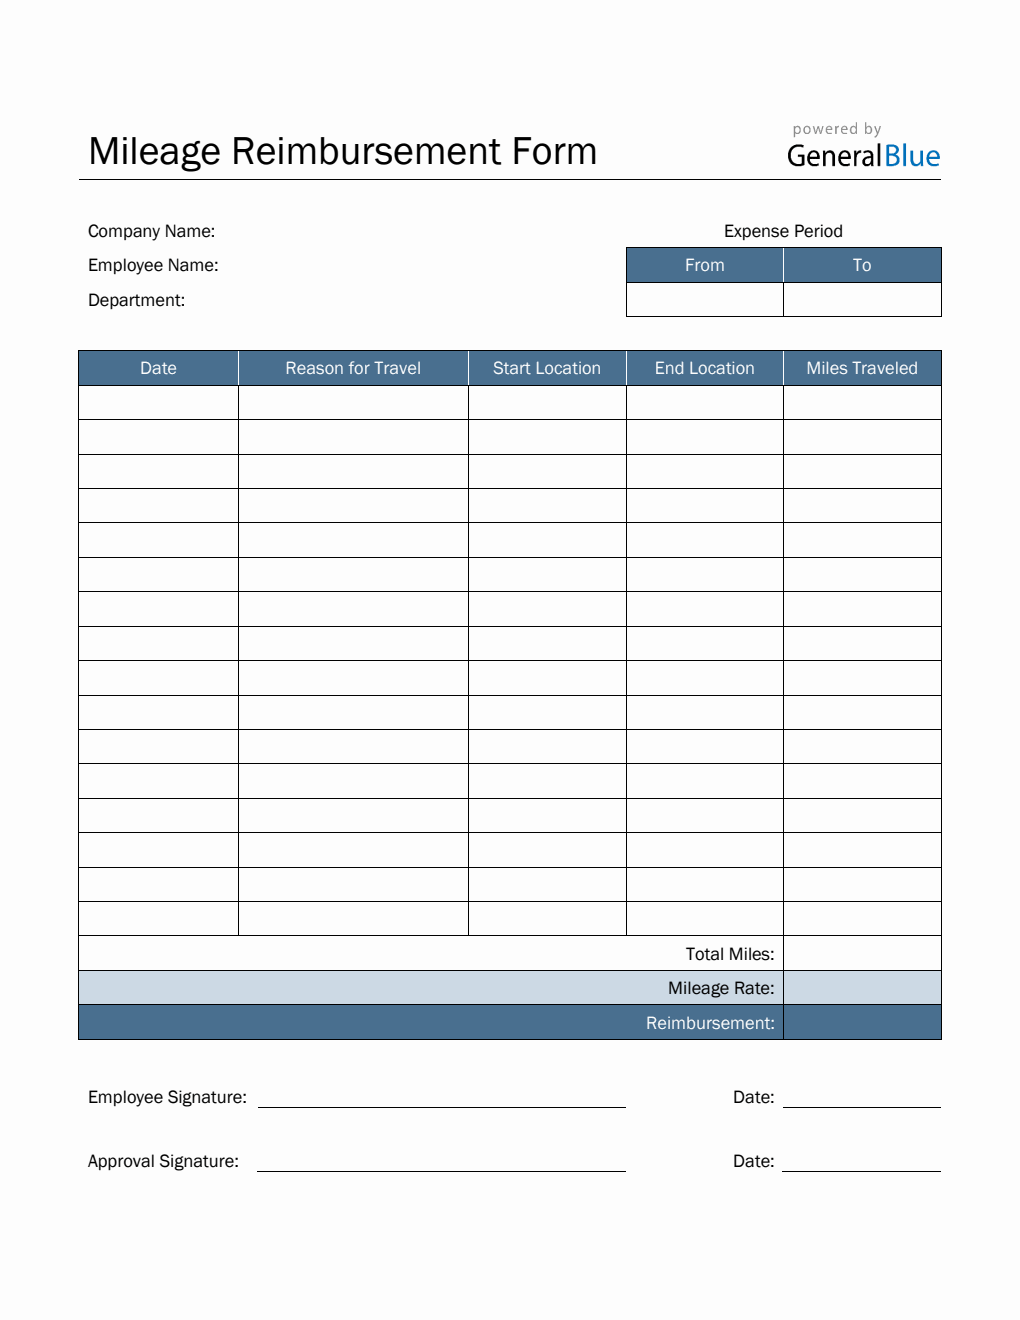 Mileage Reimbursement Form in PDF (Simple)